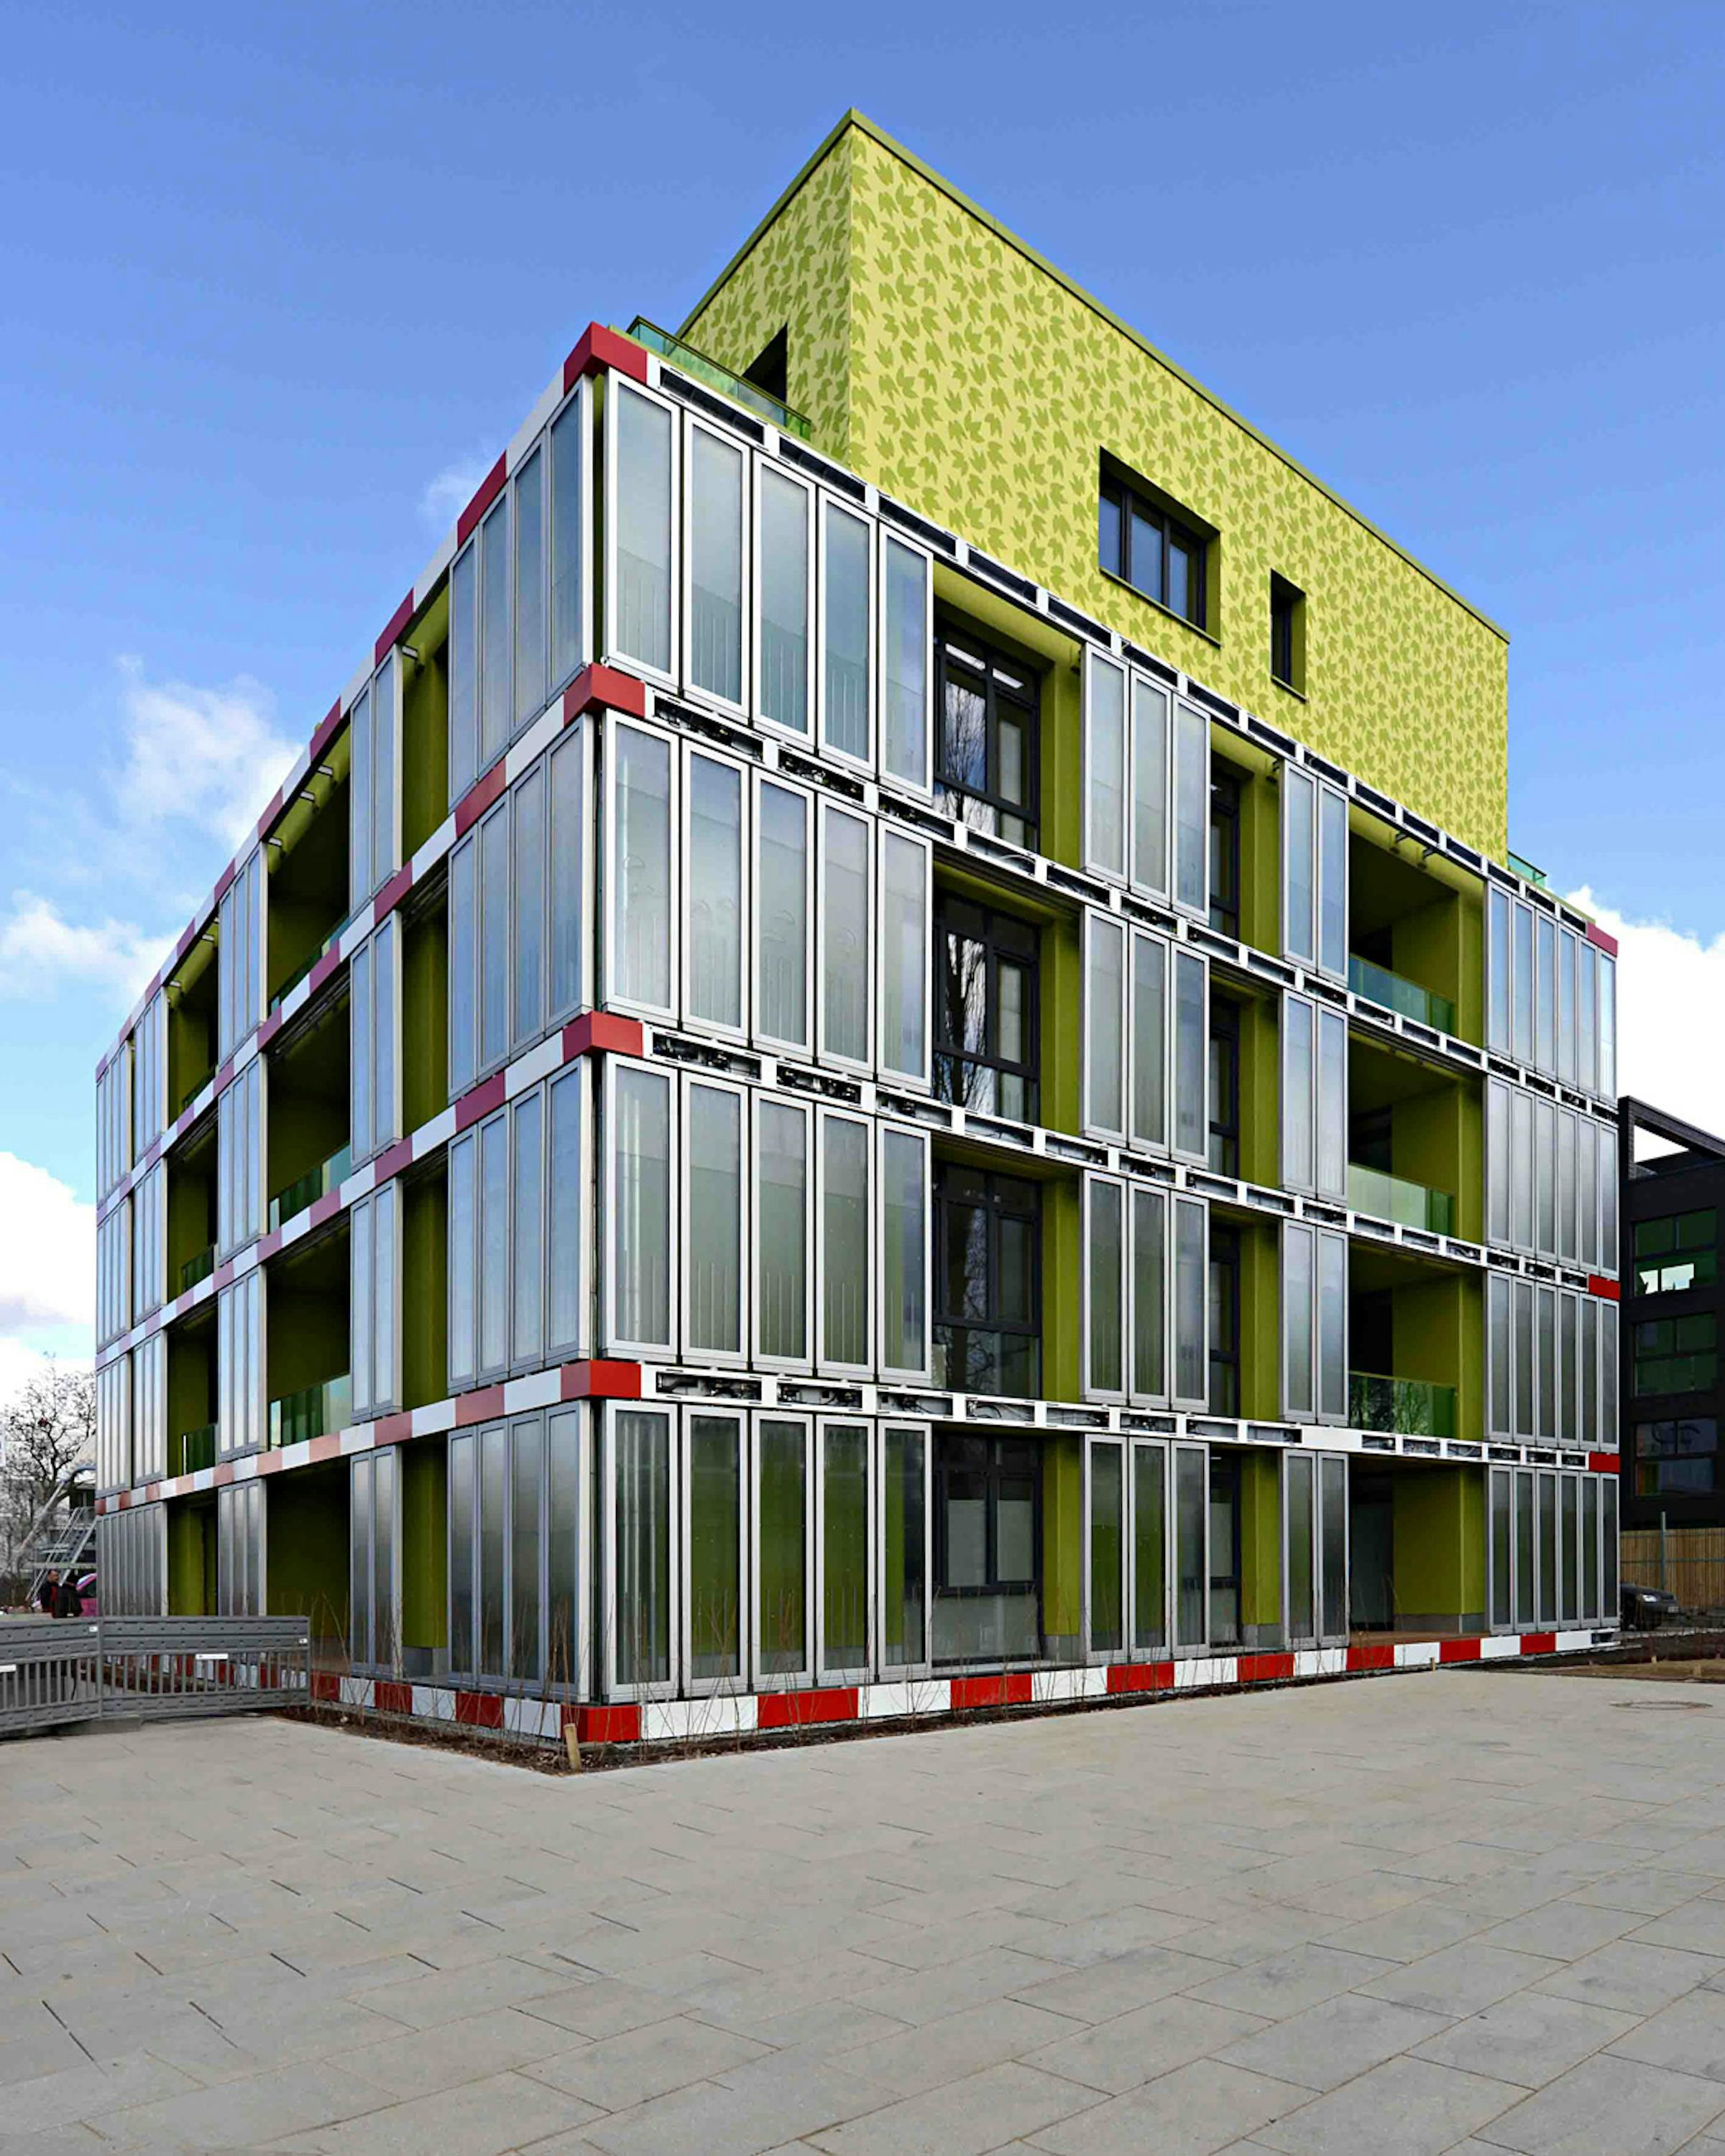 Bi q. "Дом из водорослей", Гамбург, Германия. "Дом из водорослей", Гамбург, Германия 2023. Дом из водорослей в Гамбурге. Биофасад biq House.